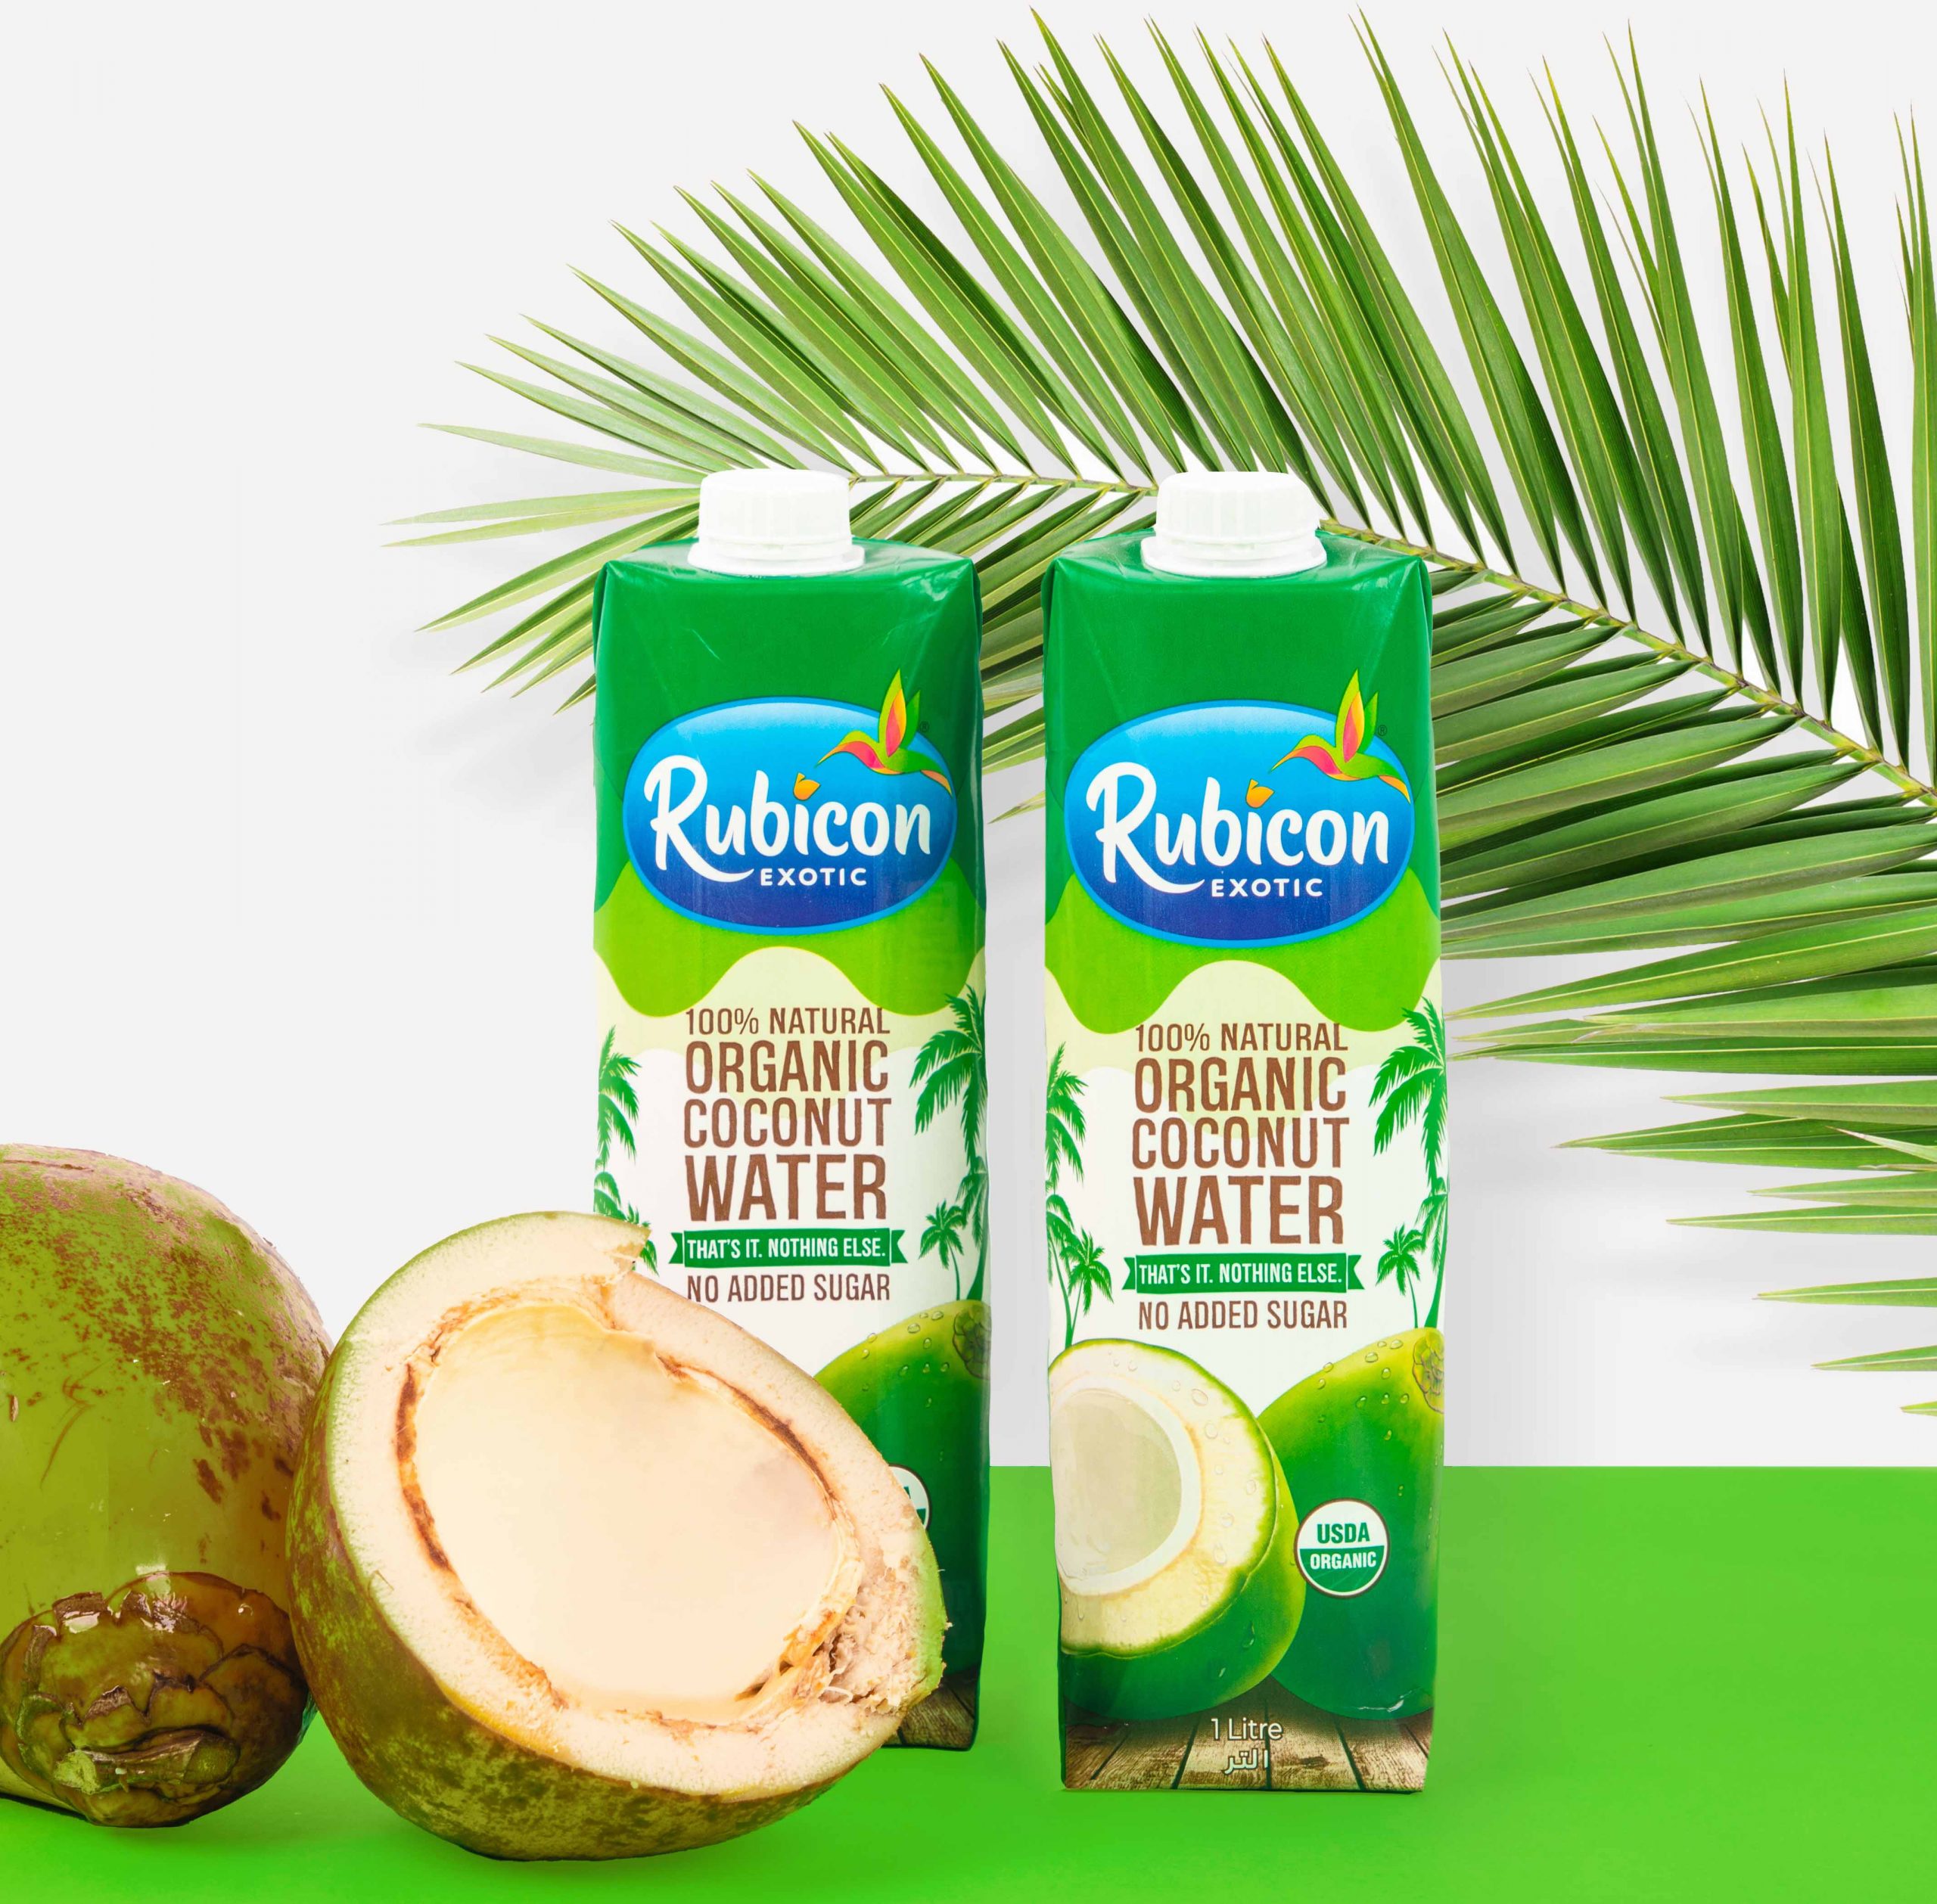 Rubicon natural coconut water